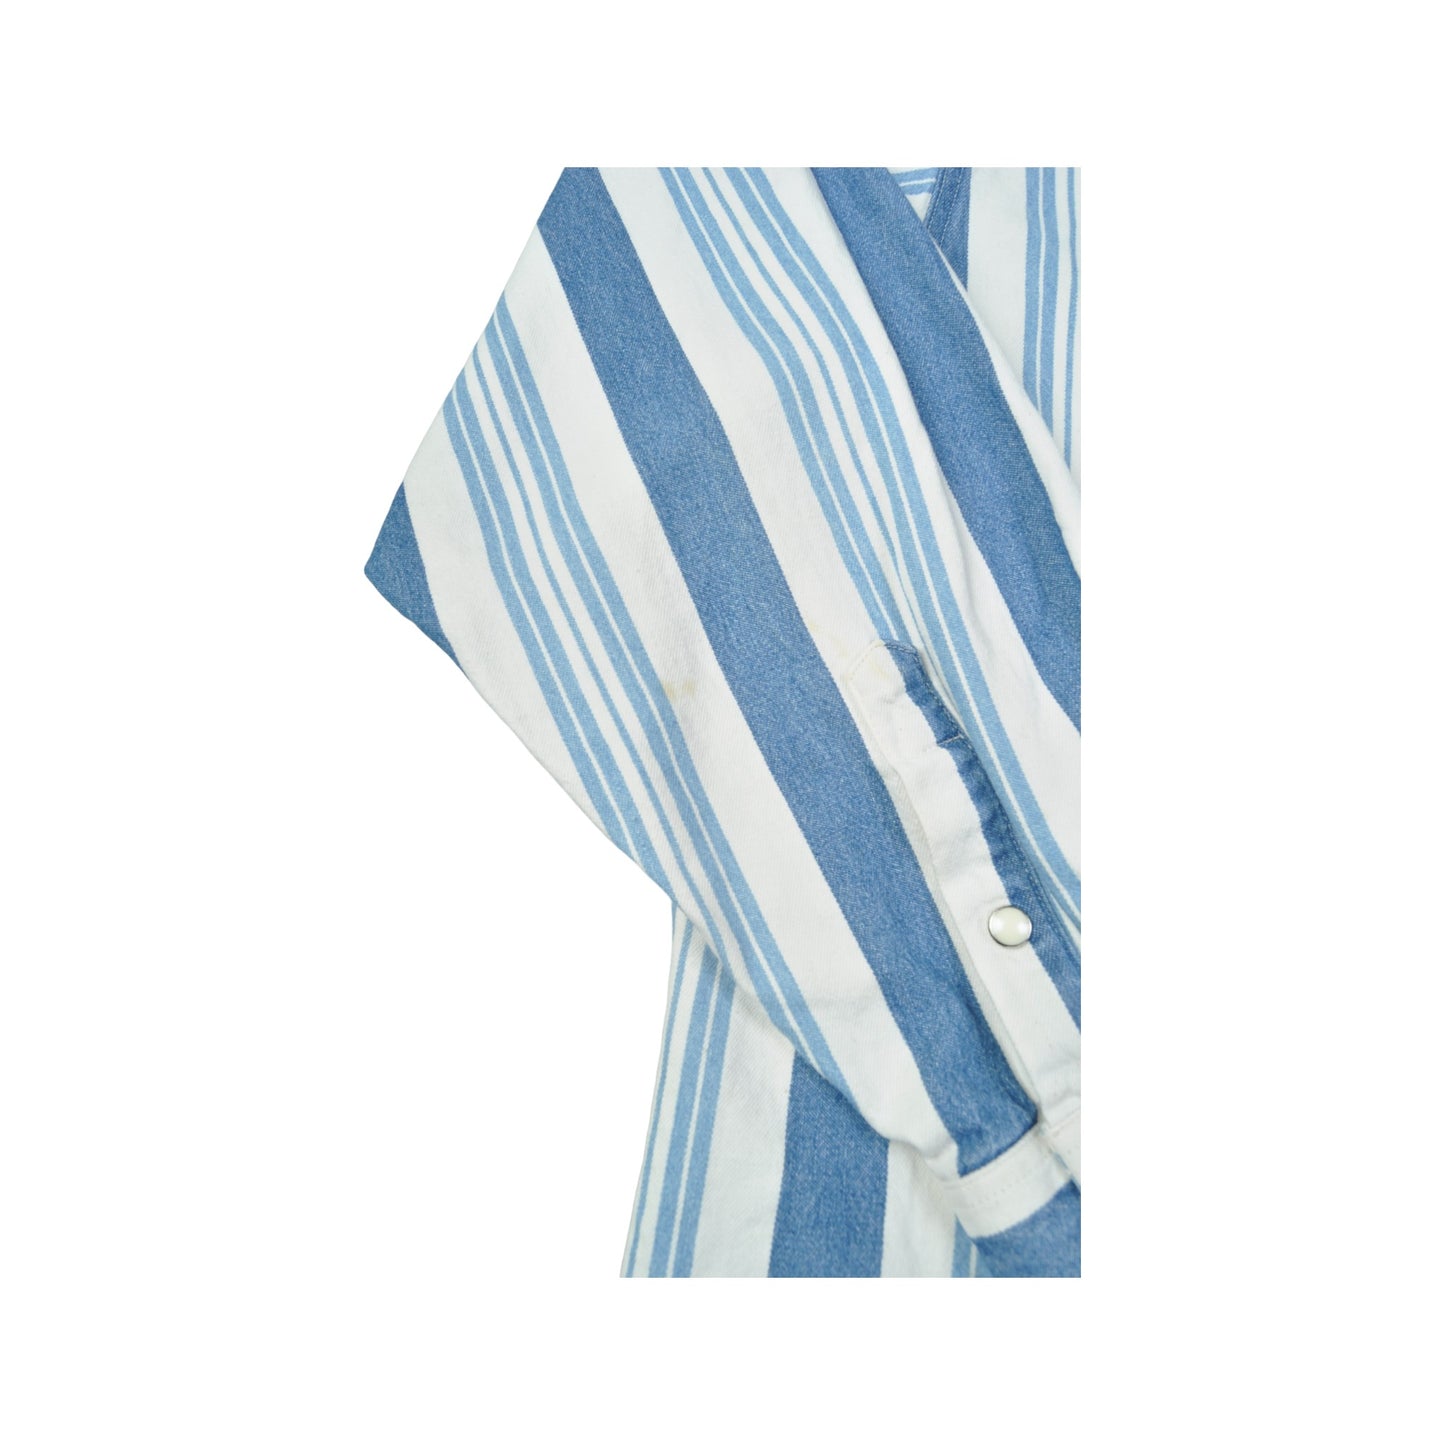 Vintage Wrangler Stripe Shirt Long Sleeve Blue XL